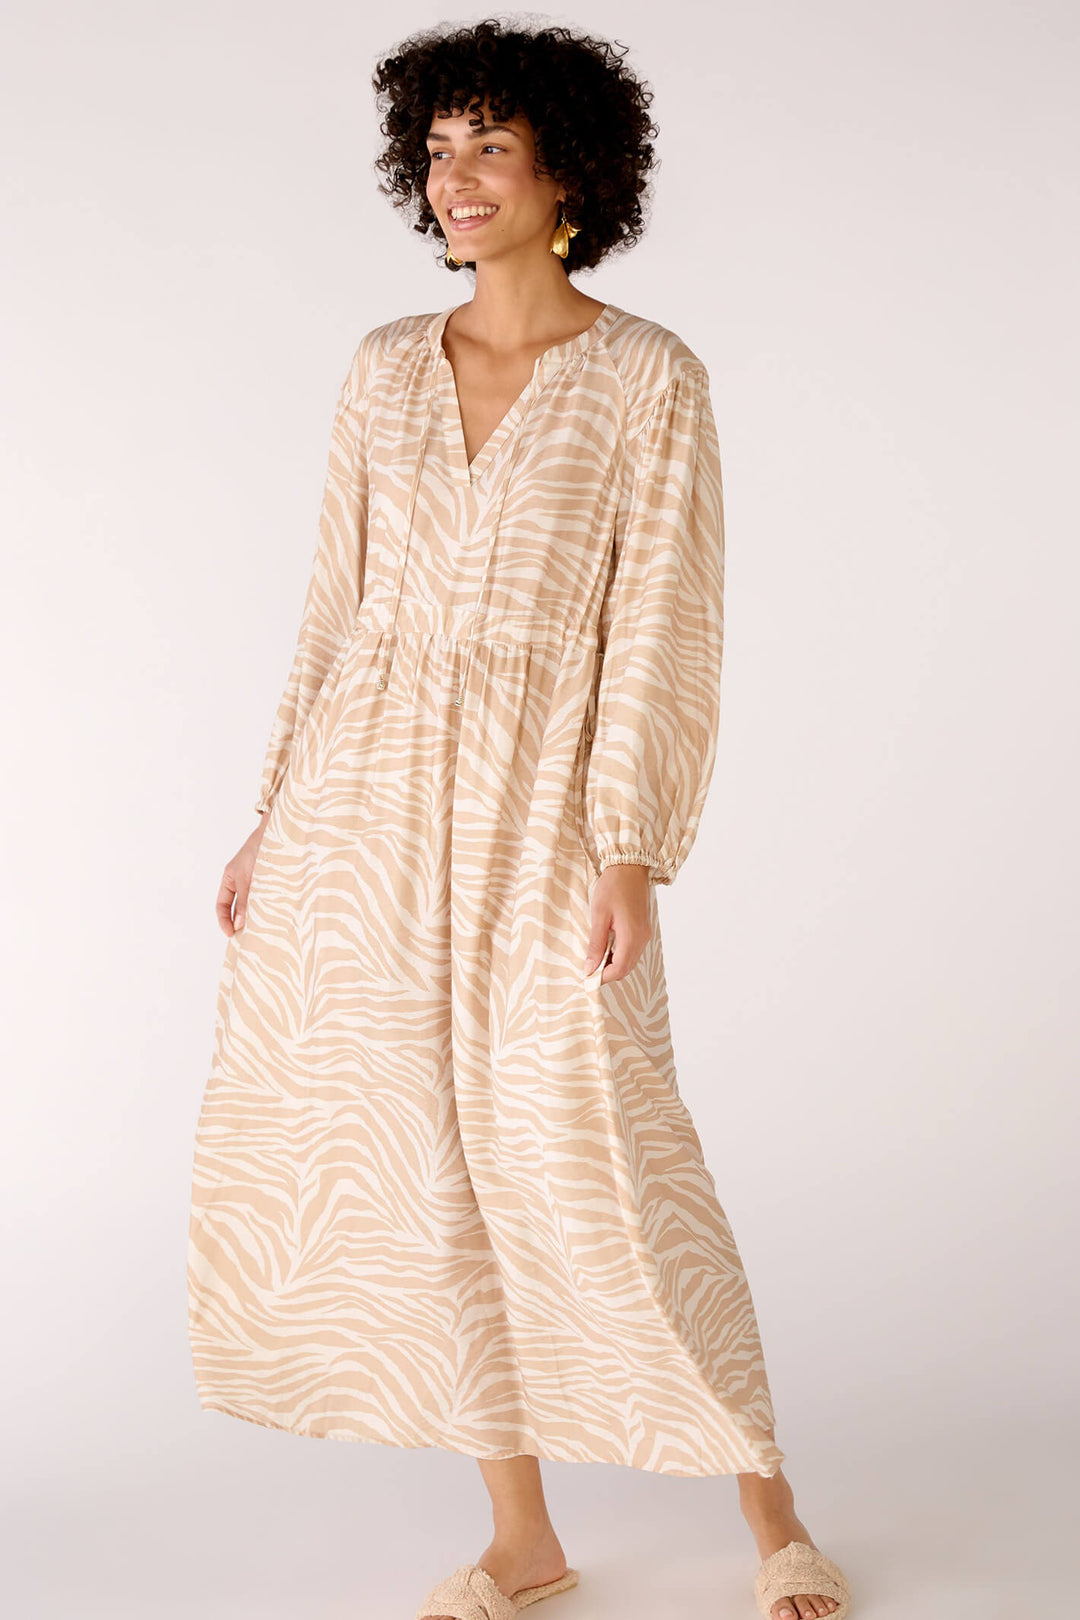 Oui 78304 Rose Camel Print Dress - Olivia Grace Fashion